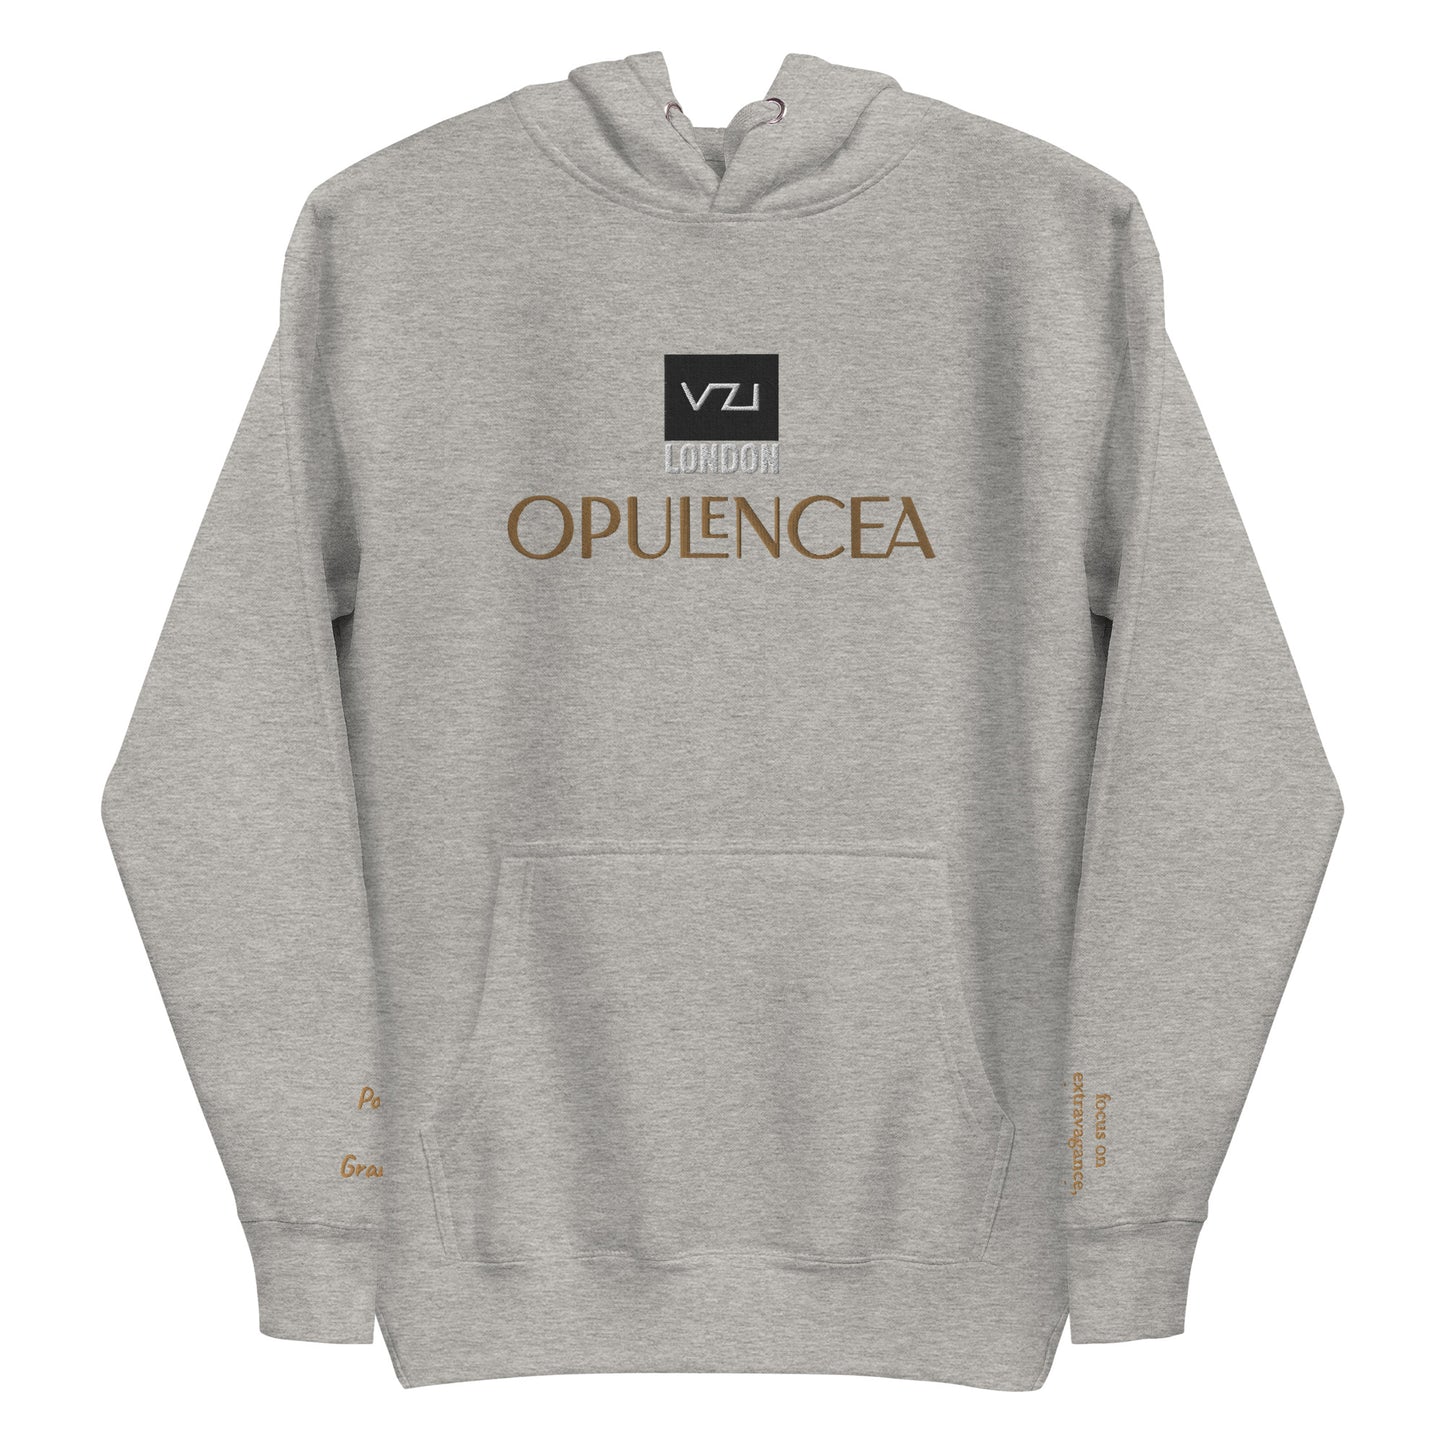 Opulencea: Unisex, Classic Cotton: Fokus auf Extravaganz, Luxus und Genuss (Posh Grandeur)